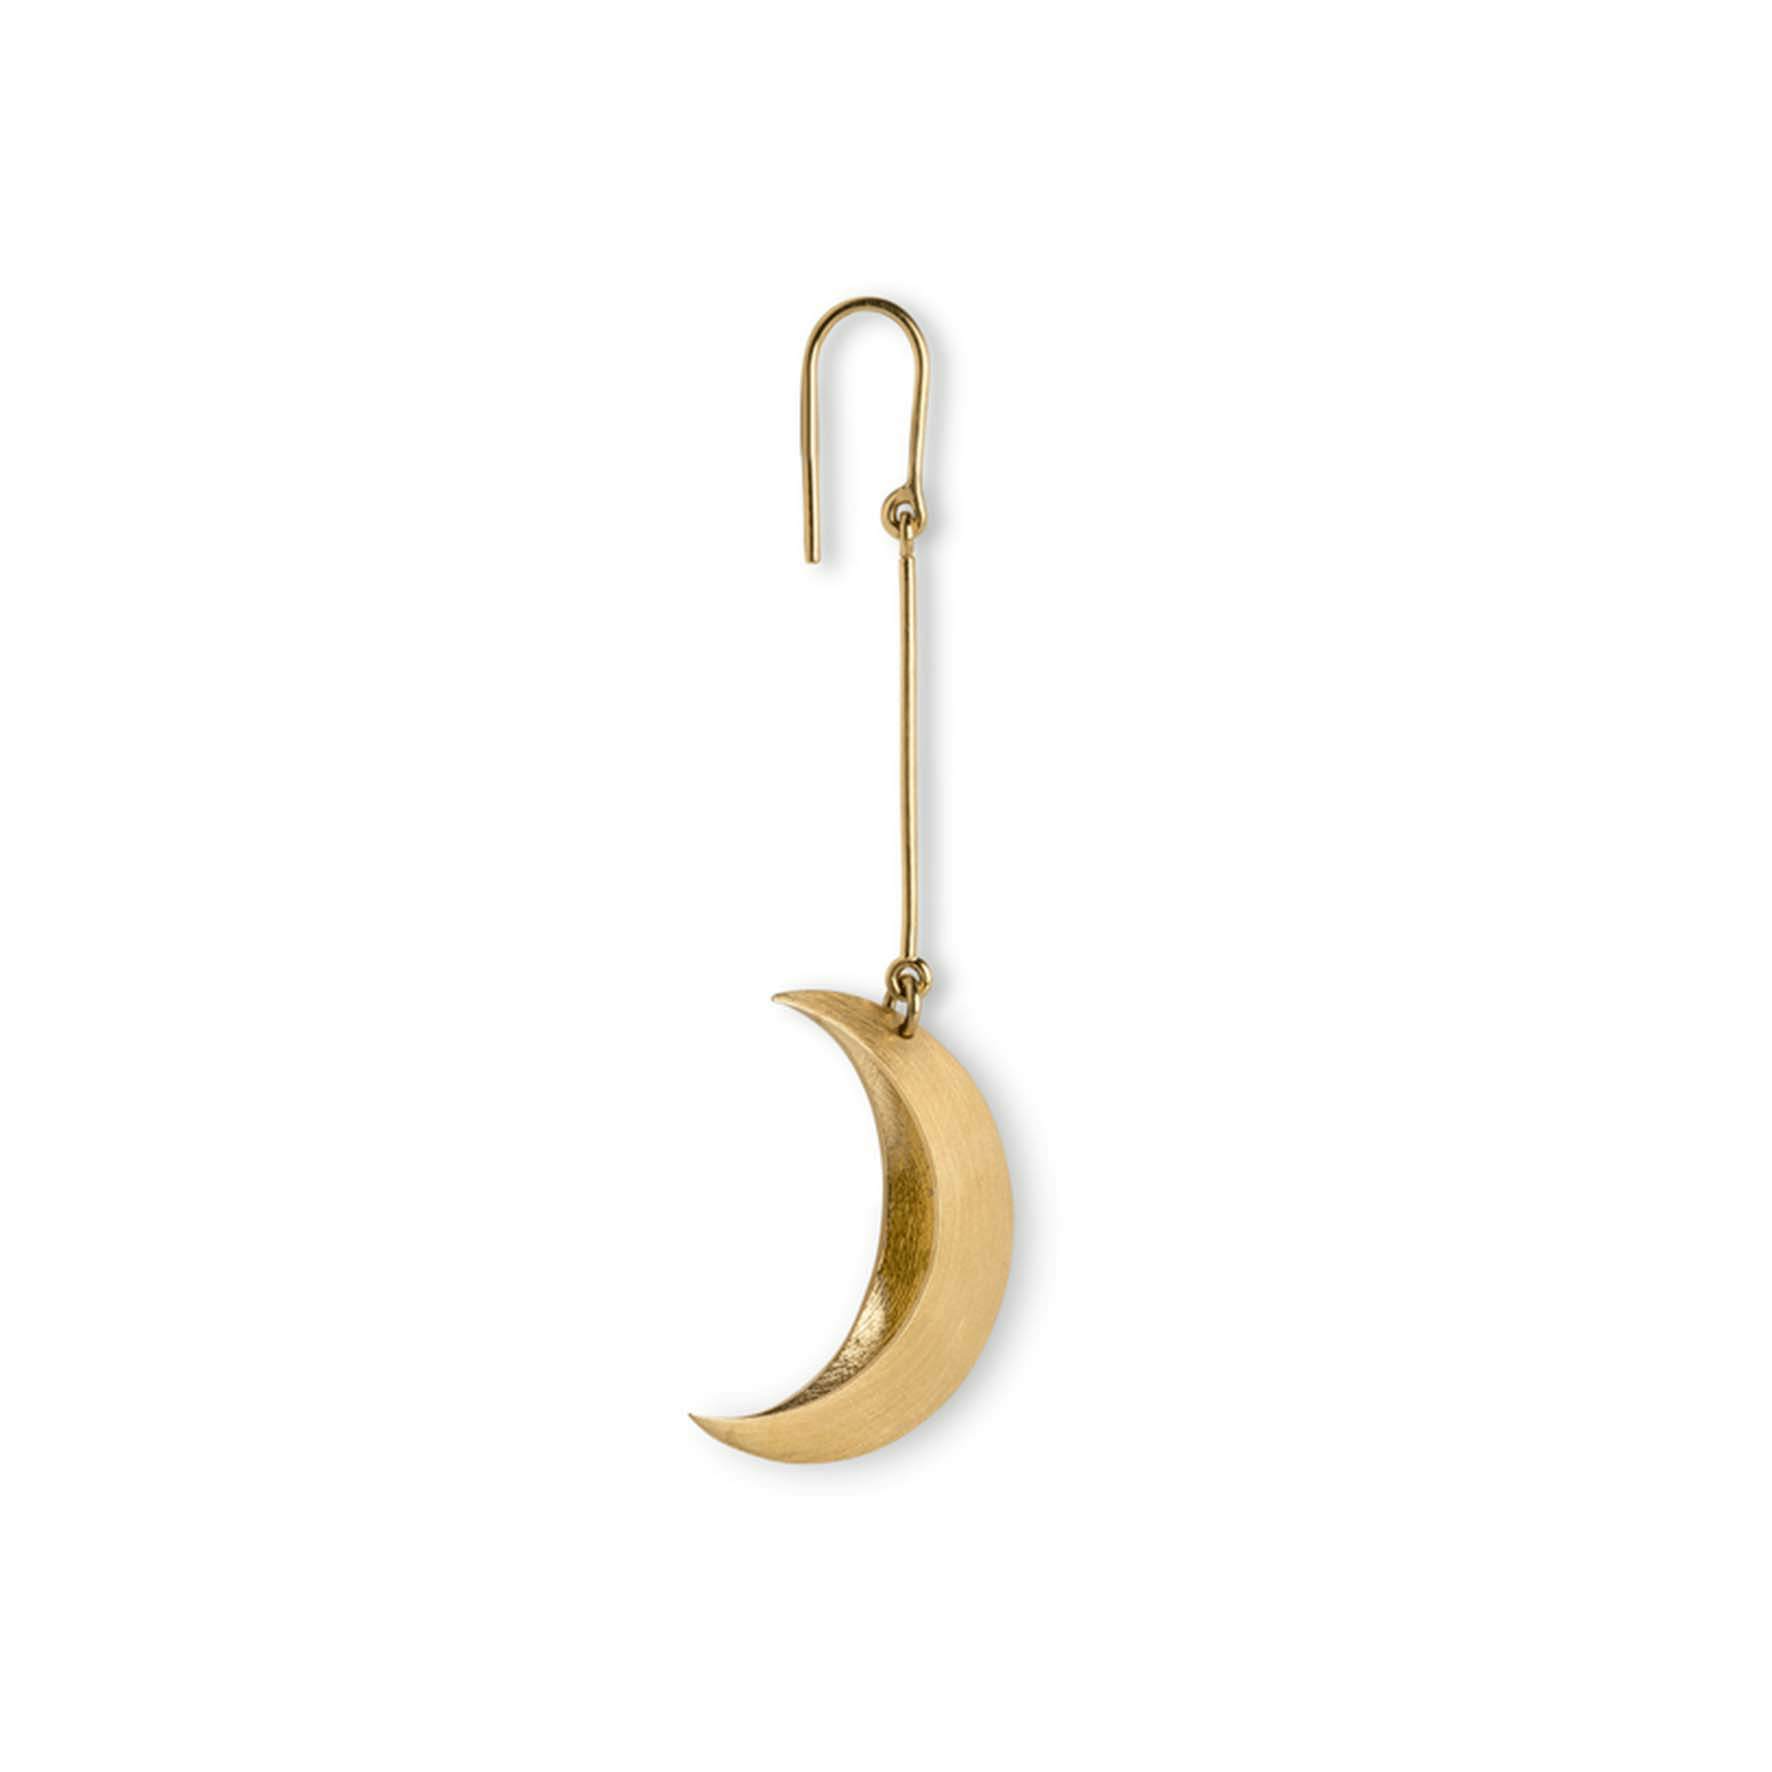 Half Moon Earring von Jane Kønig in Vergoldet-Silber Sterling 925